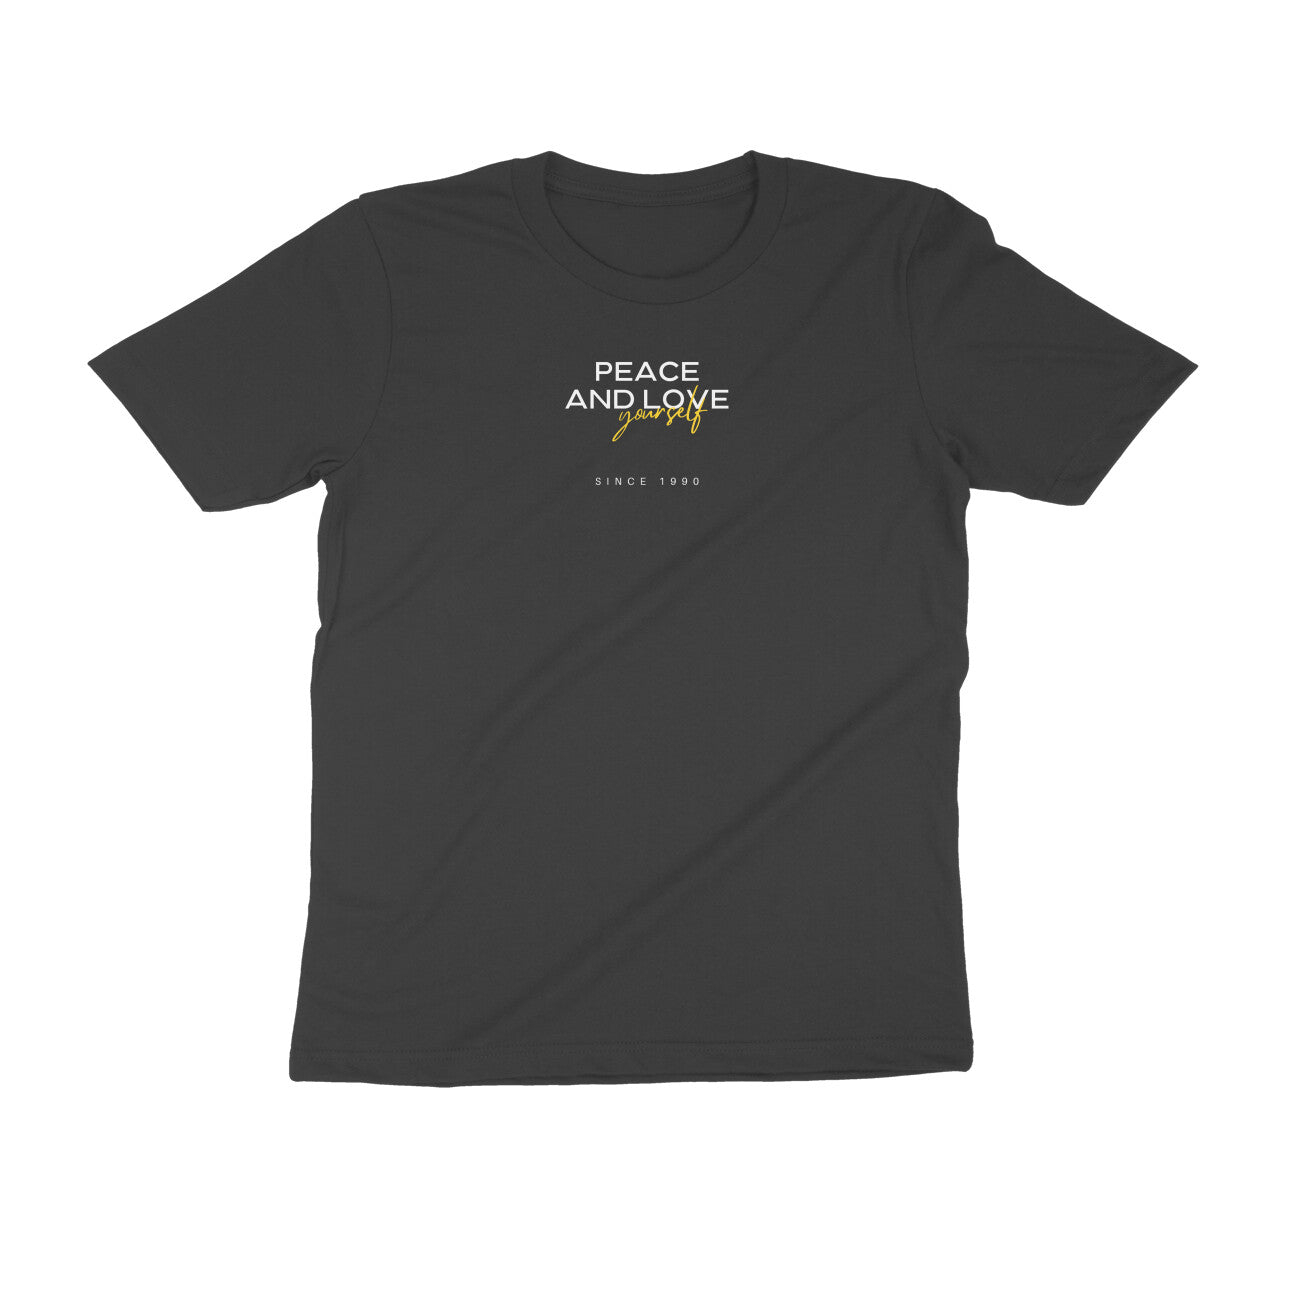 Peace and love - Slogan T-shirt - Men